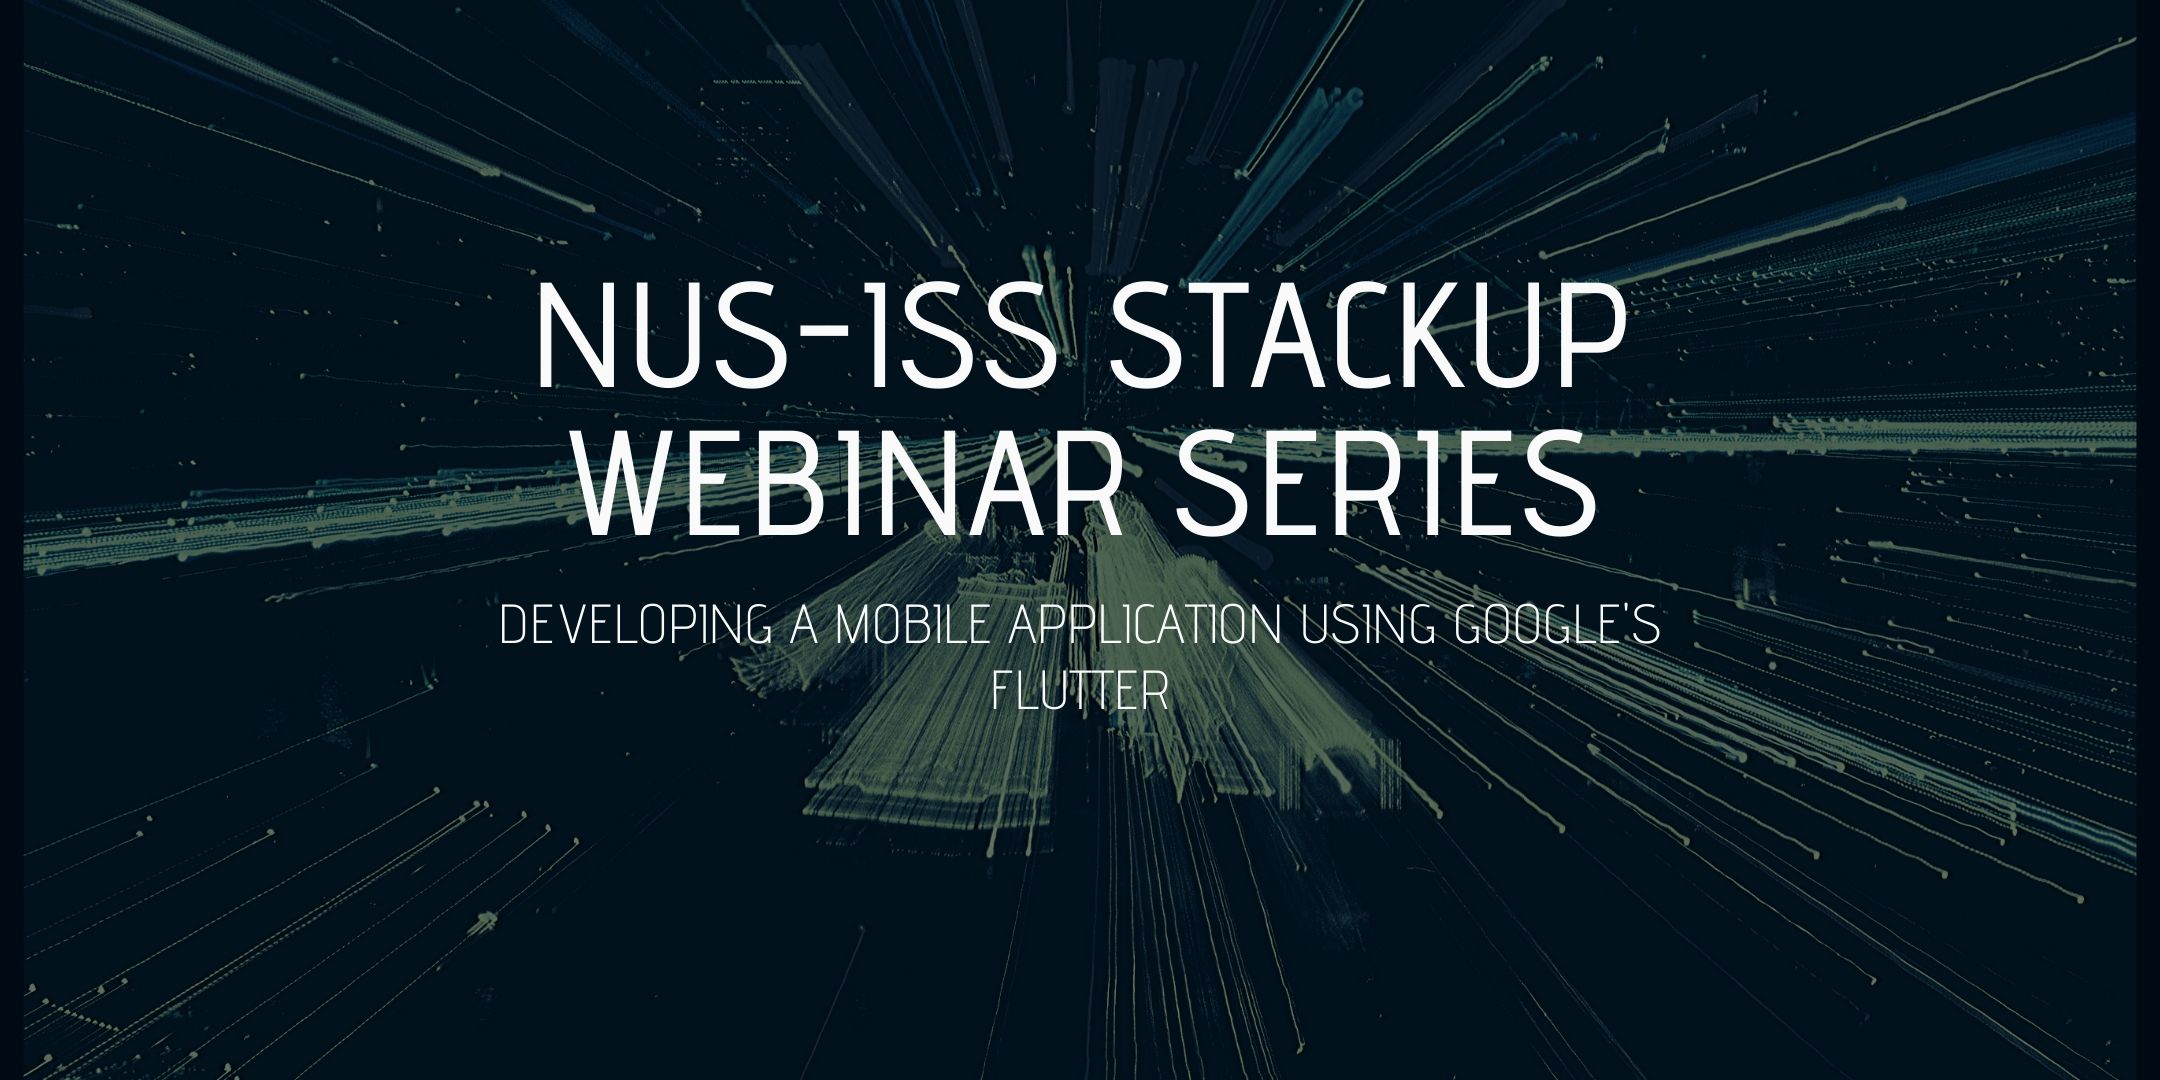 NUS-ISS StackUp Webinar: Developing a mobile application using Google's Flutter